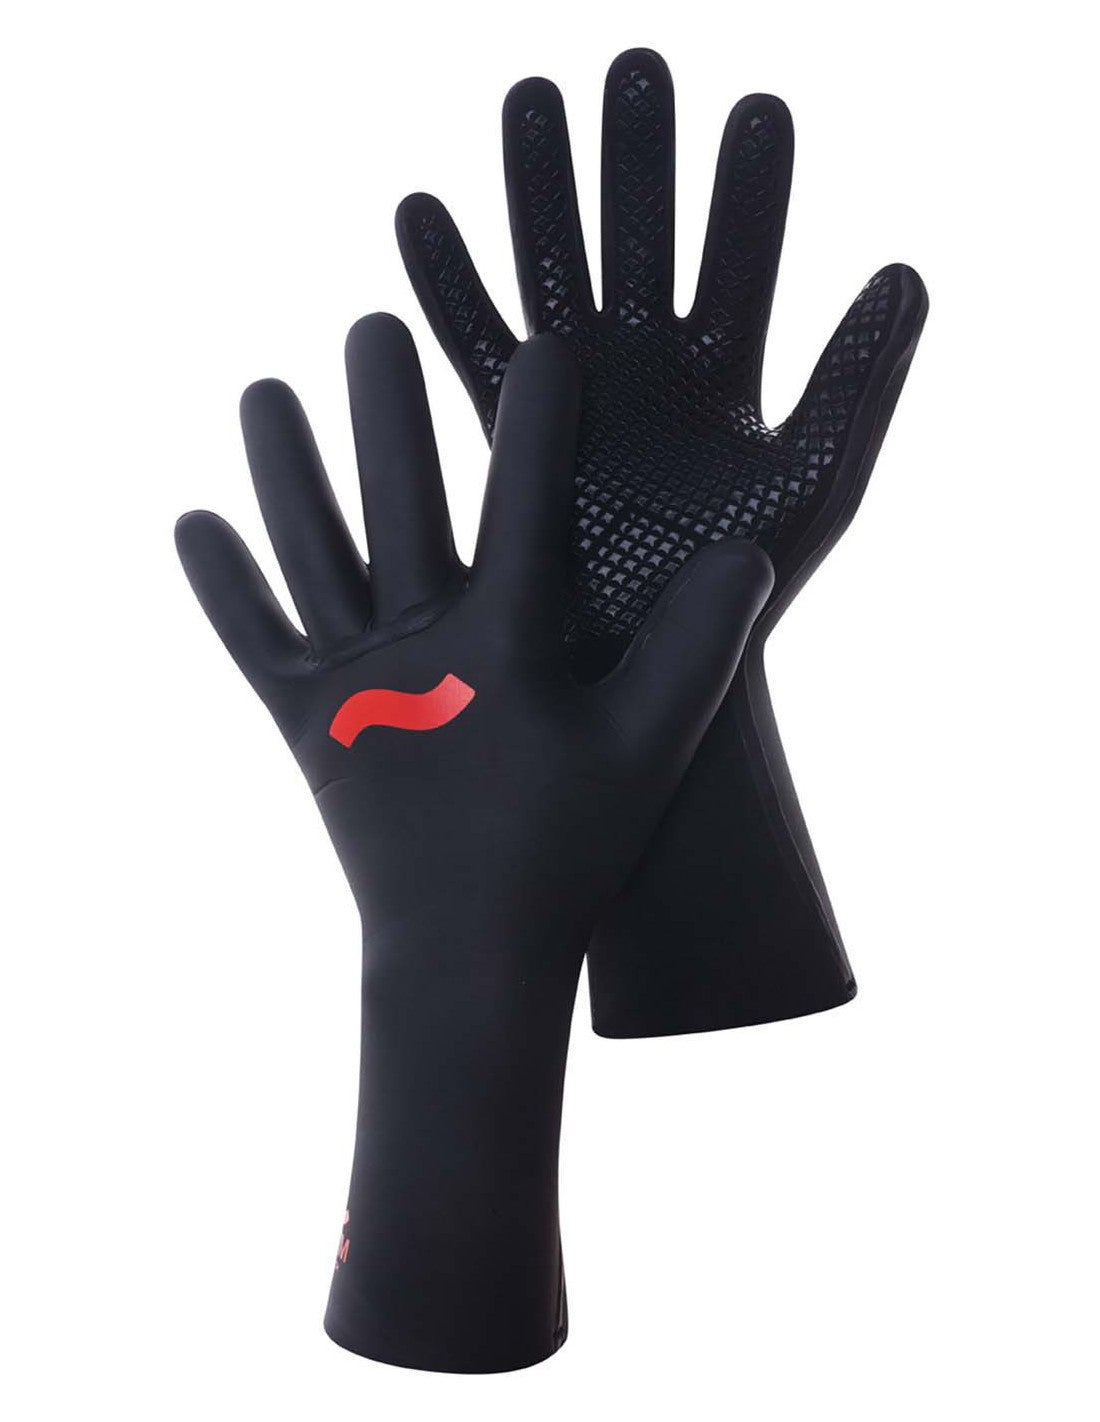 C-Skins Swim Research 3mm Swim Gloves